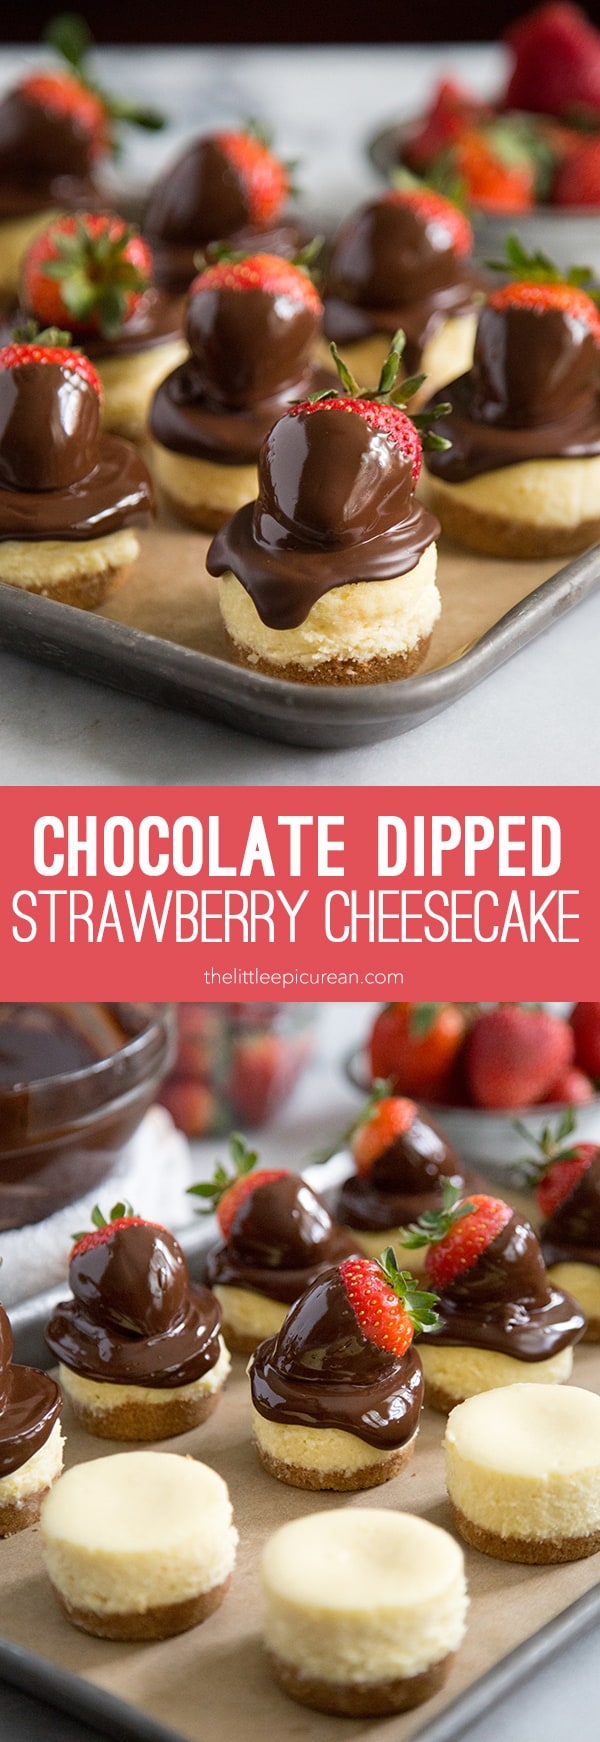 Chocolate Dipped Strawberry Cheesecake